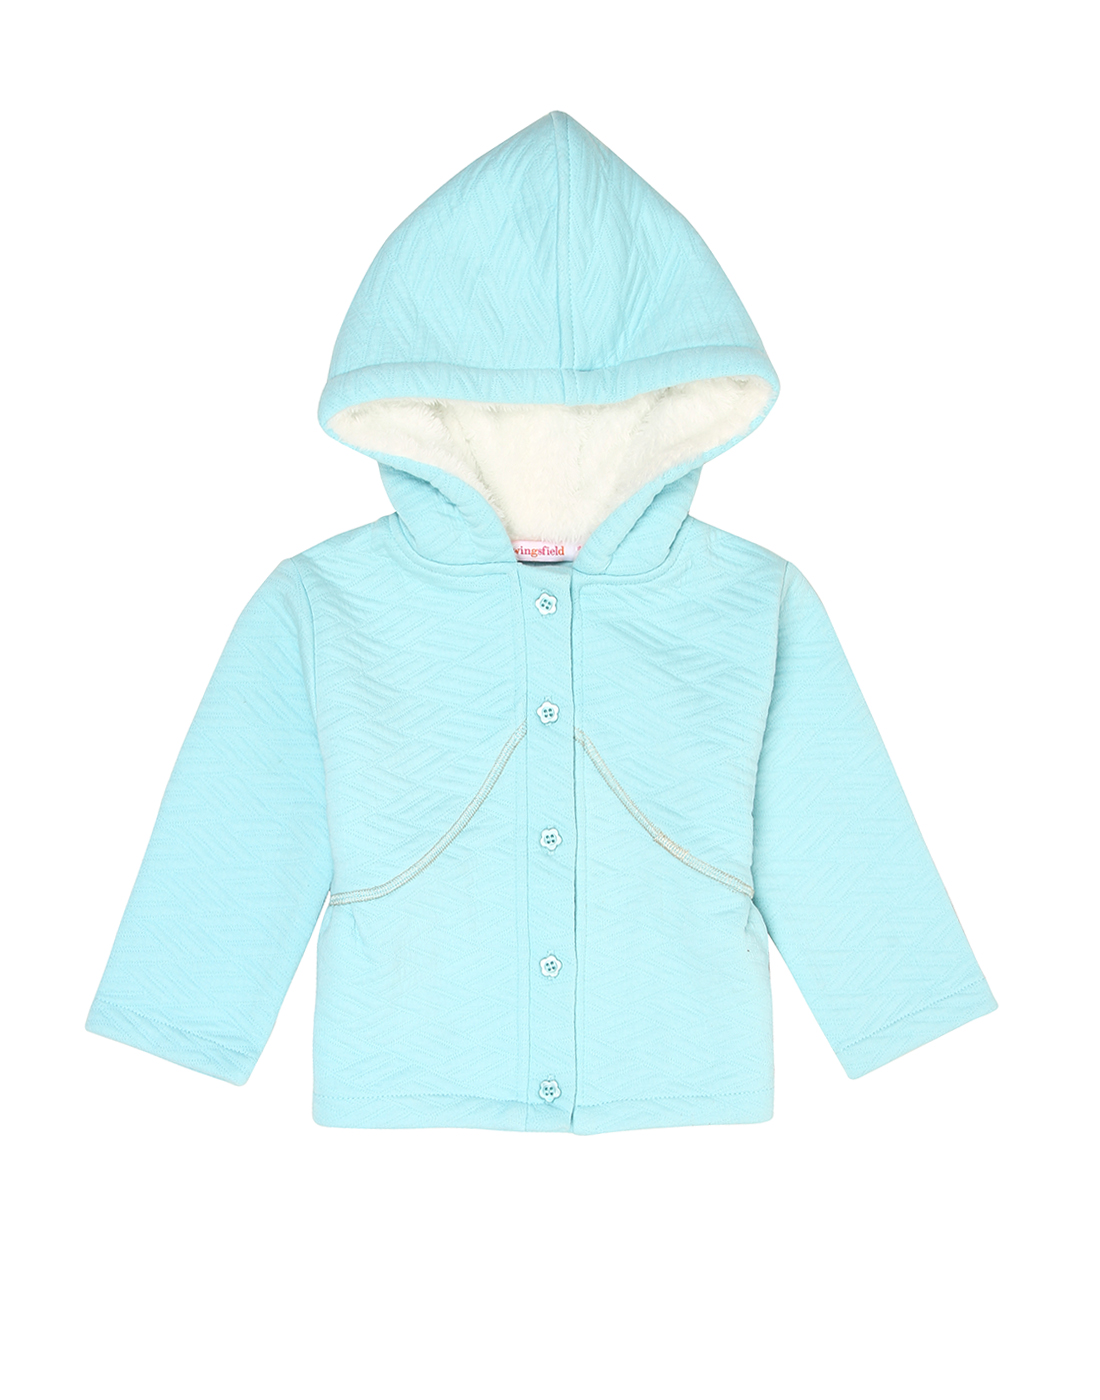 Wingsfield Baby Girl Light Blue Solid Coat